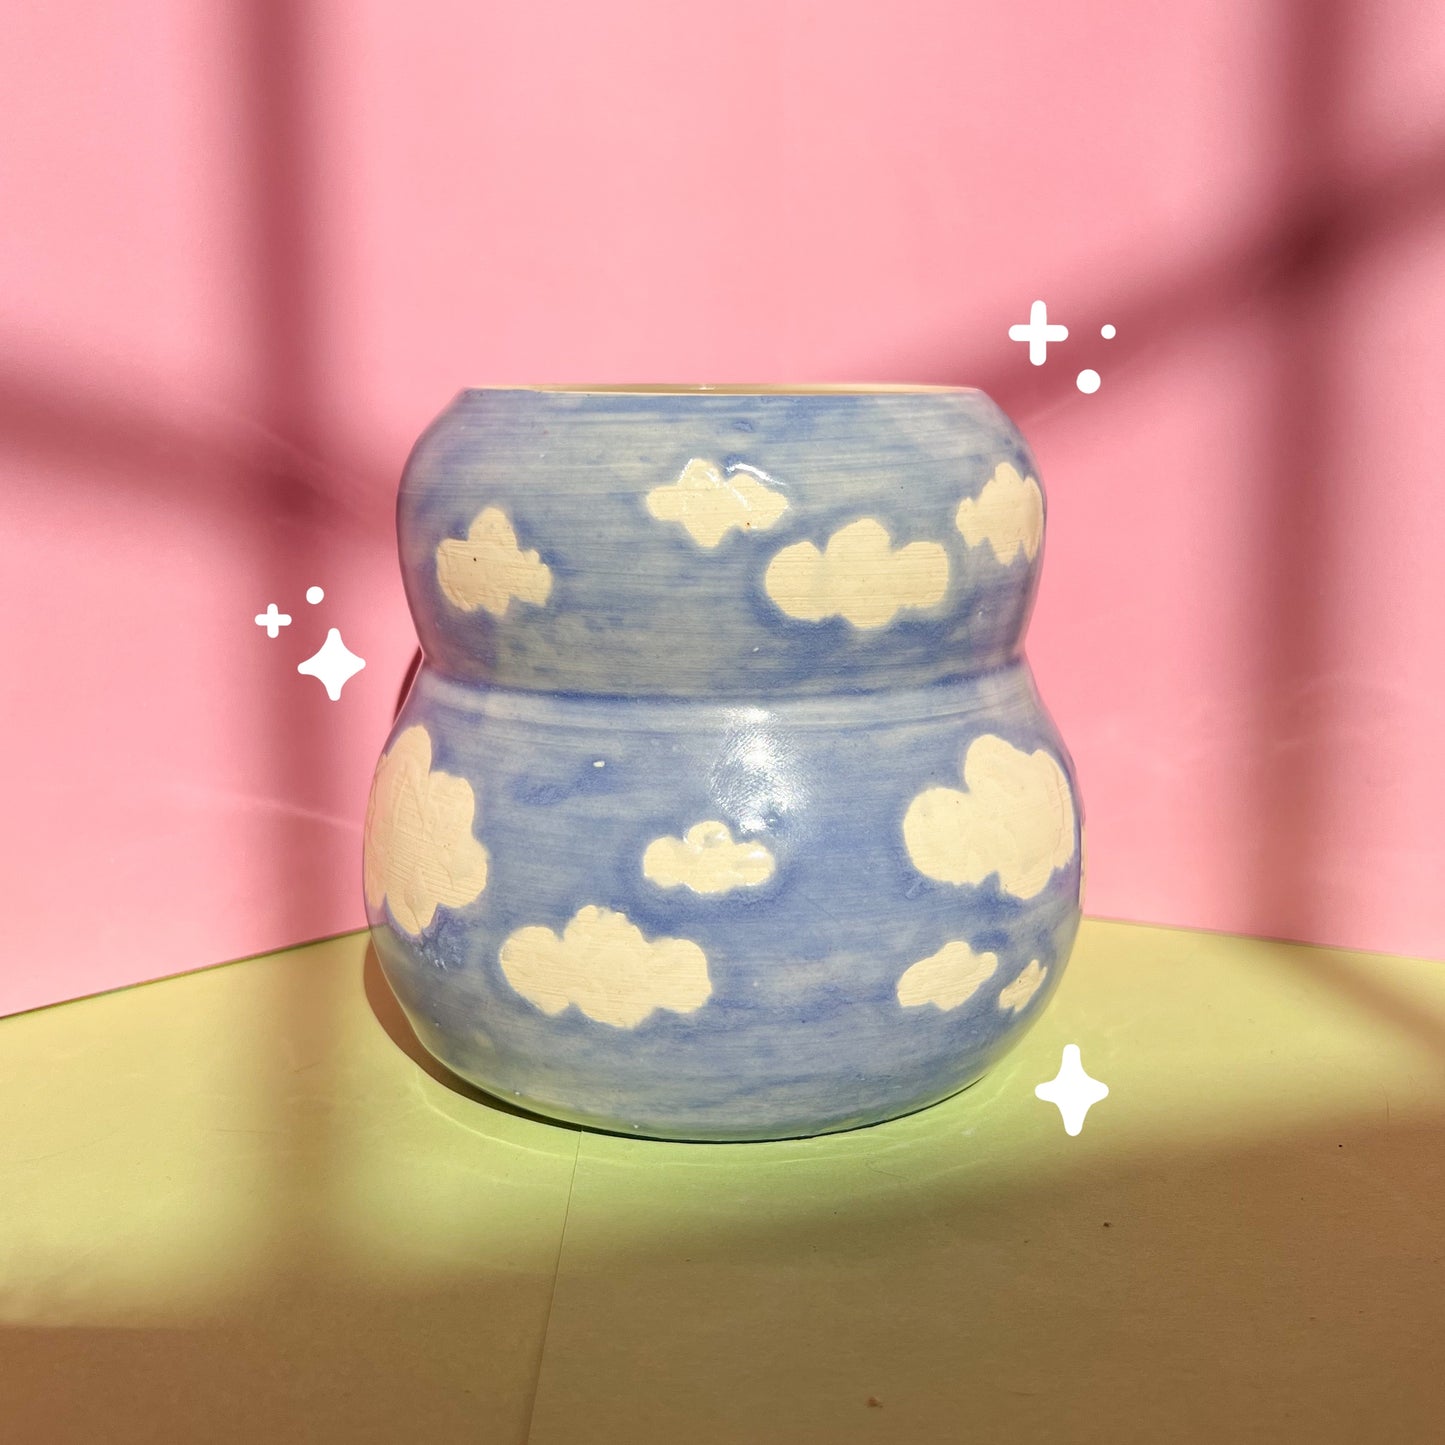 Cloudy vase :)